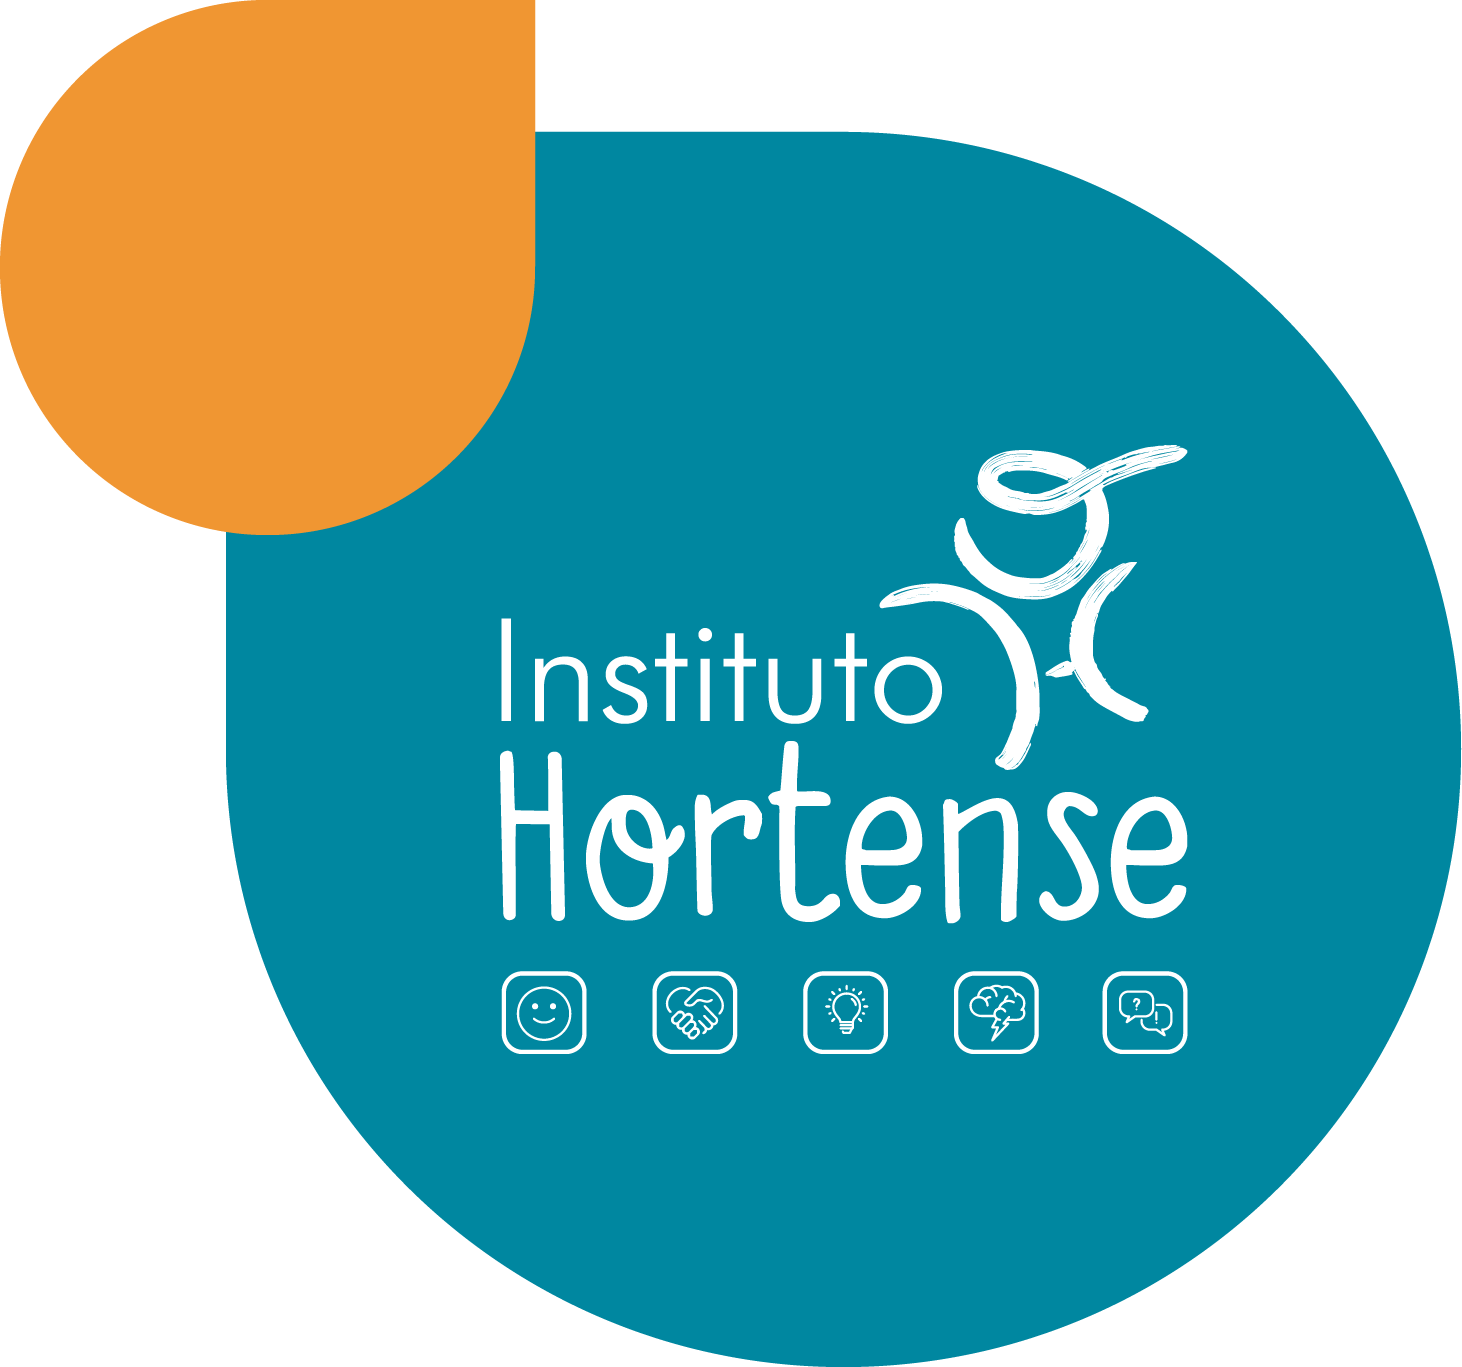 Instituto Hortense - Composicao de Marca (1)